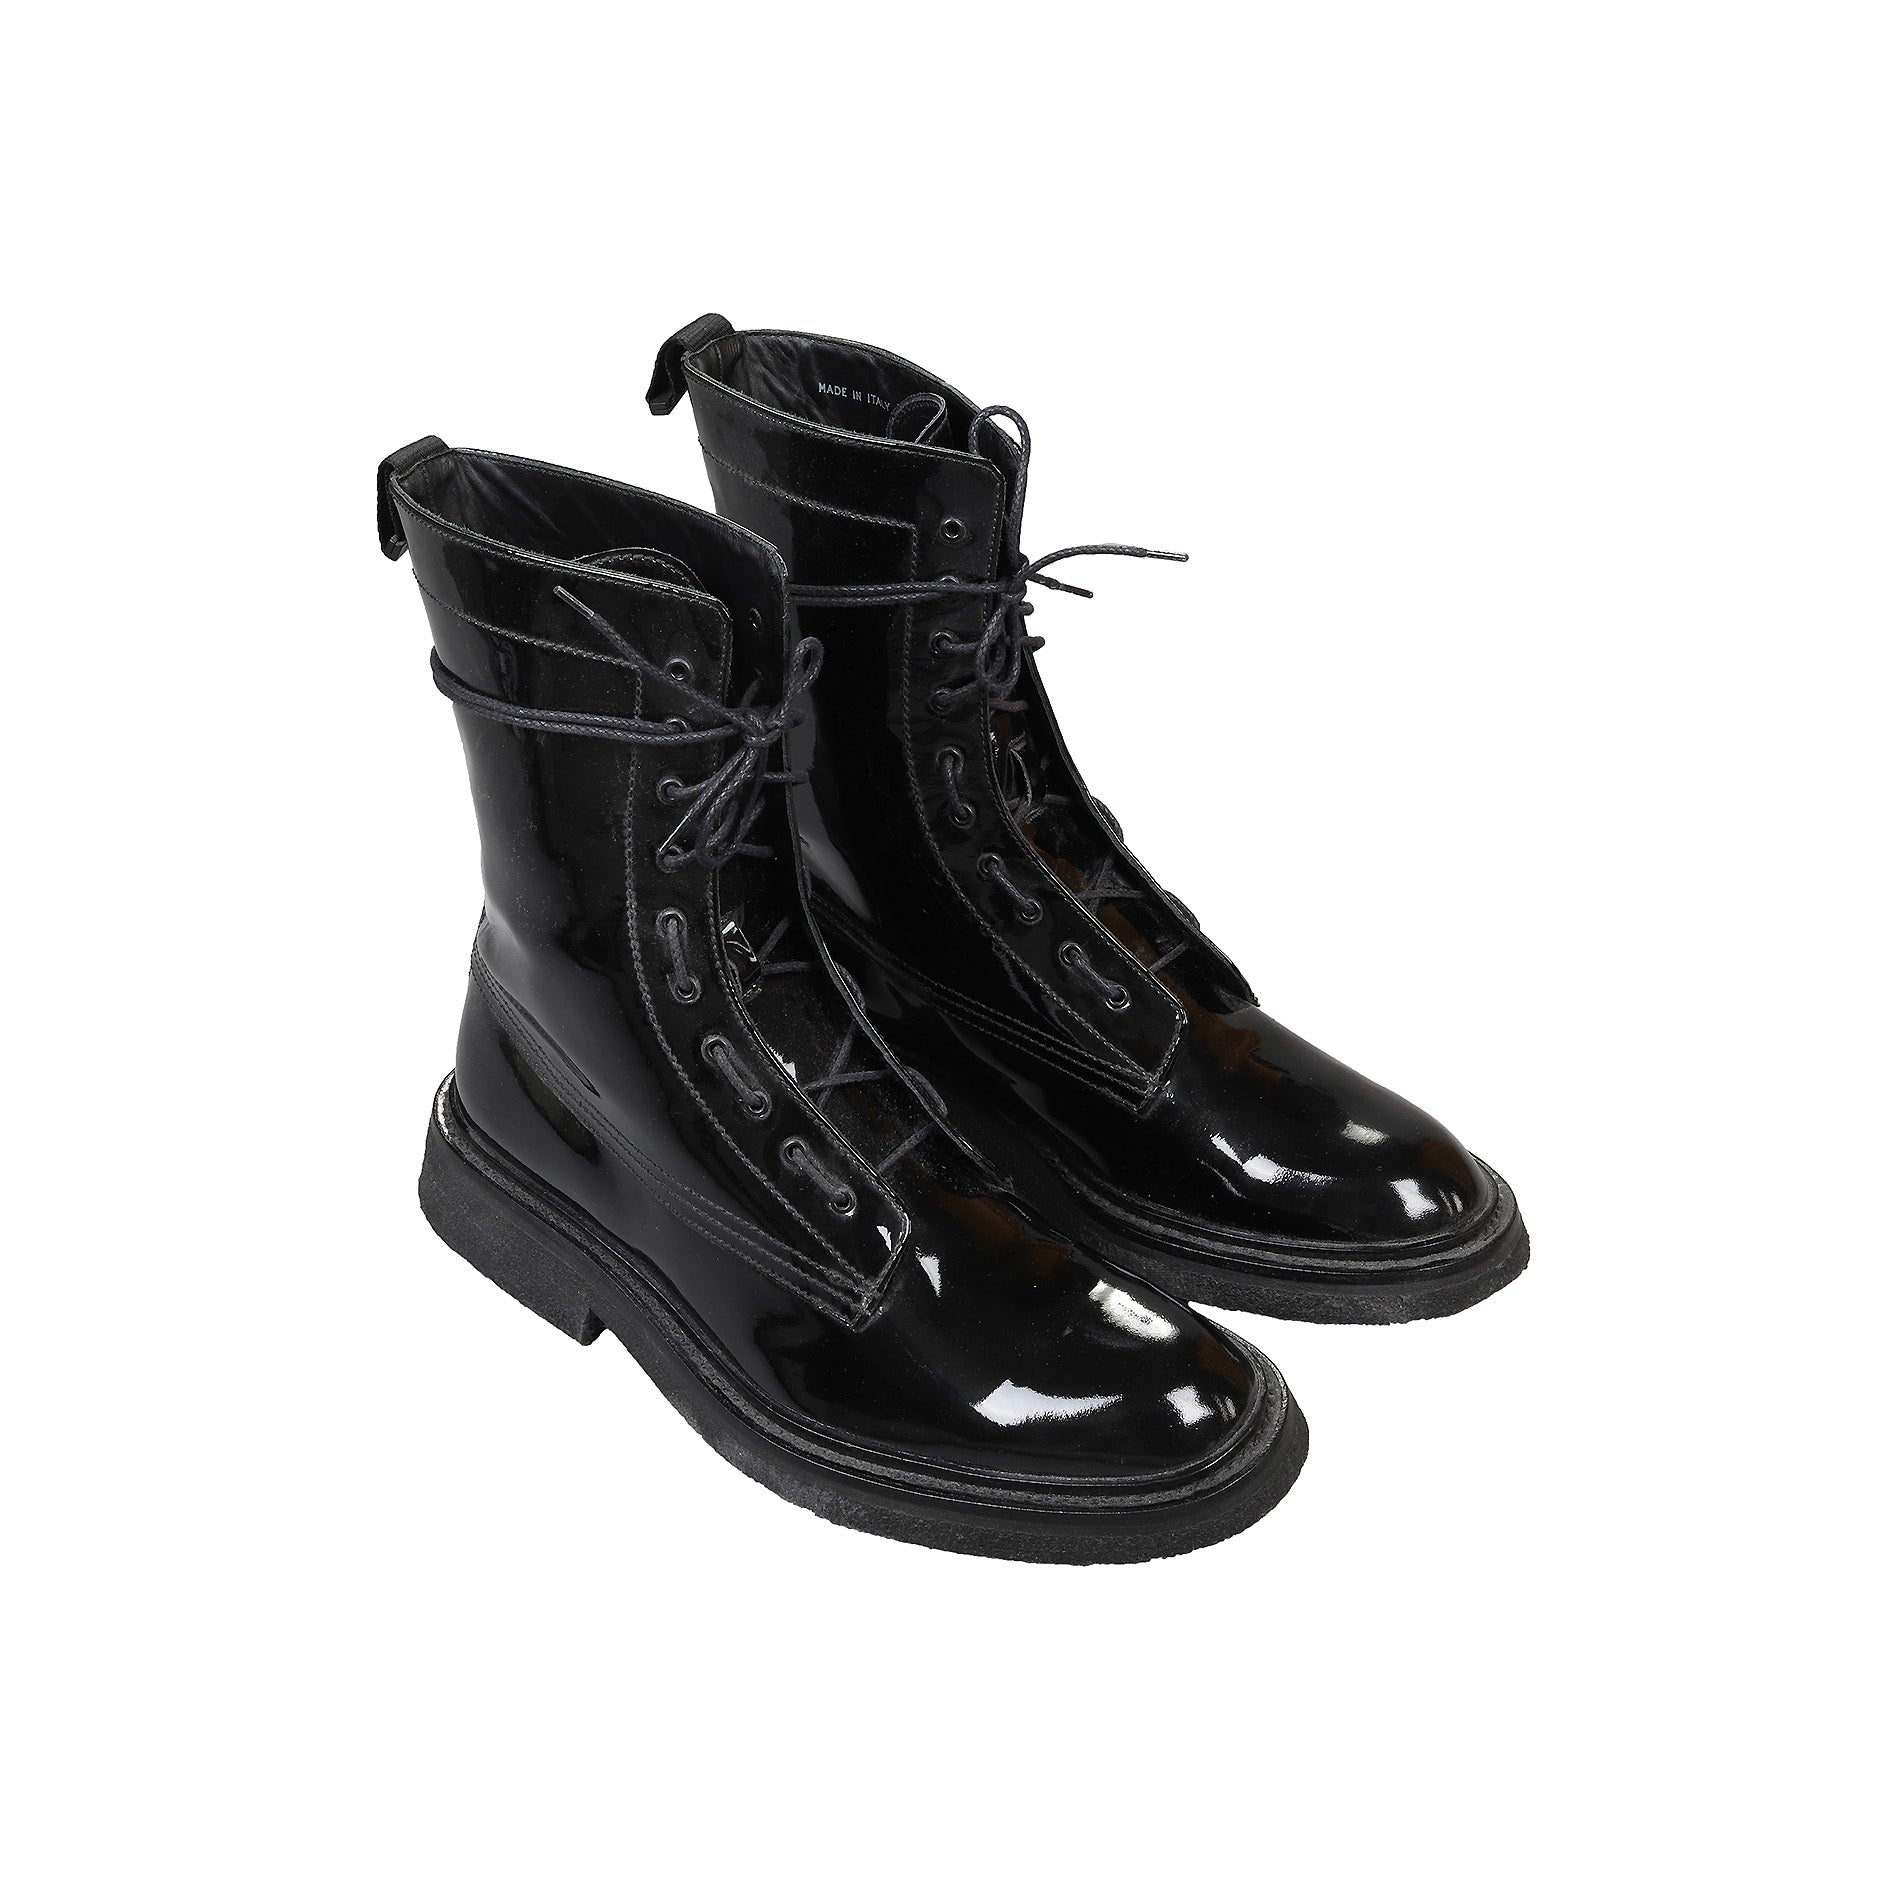 Shop Christian Dior Boots Boots KCI866CRUS900 by ayaguilera  BUYMA